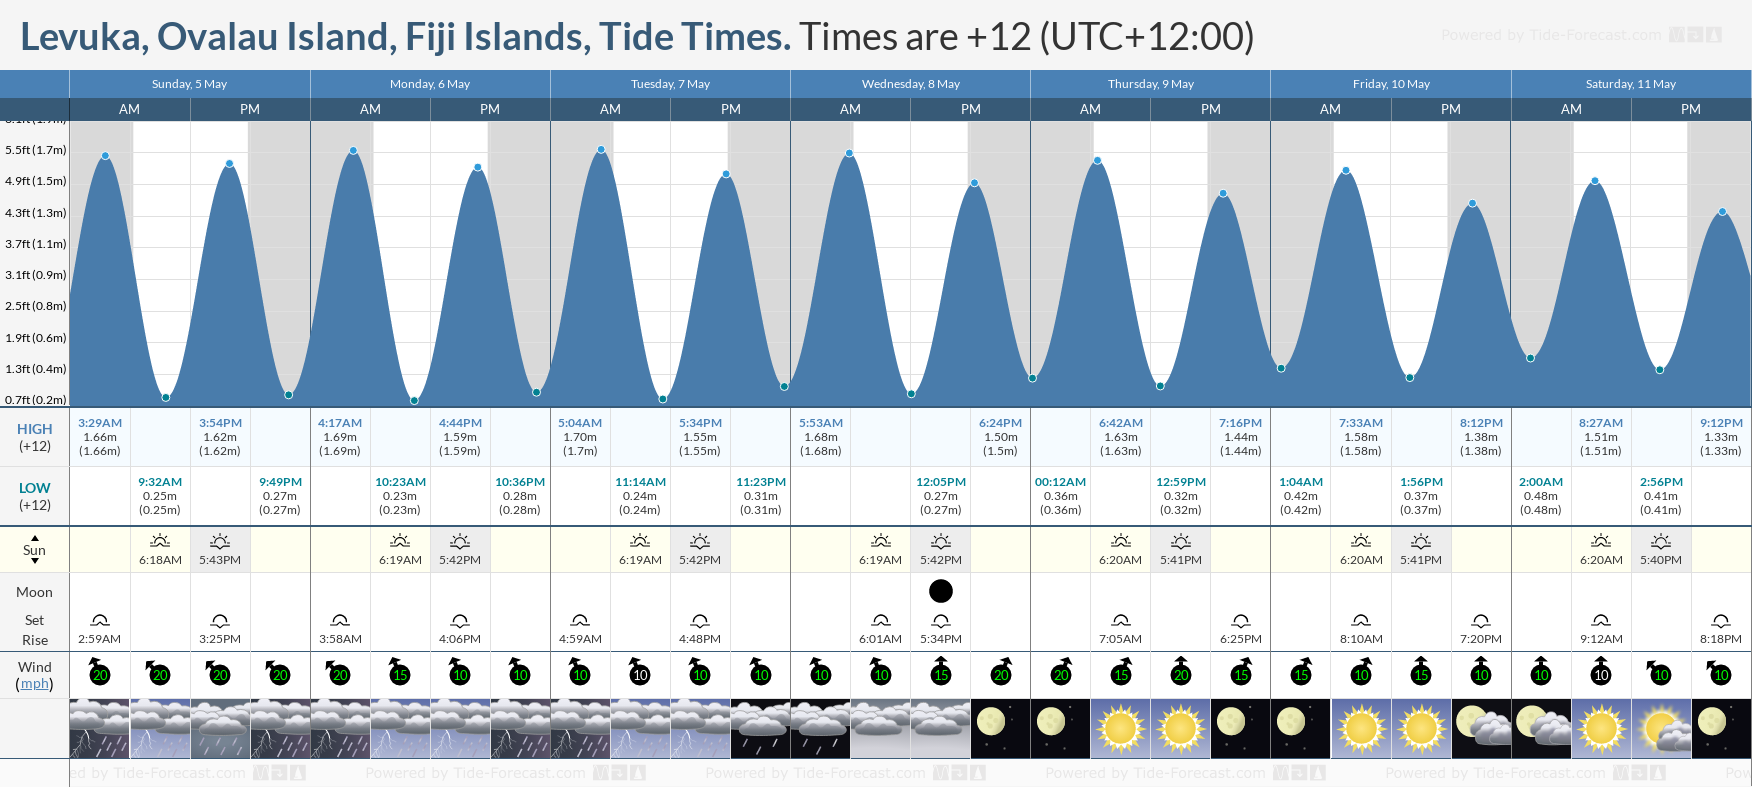 Levuka, Ovalau Island, Fiji Islands Tide Chart including high and low tide tide times for the next 7 days